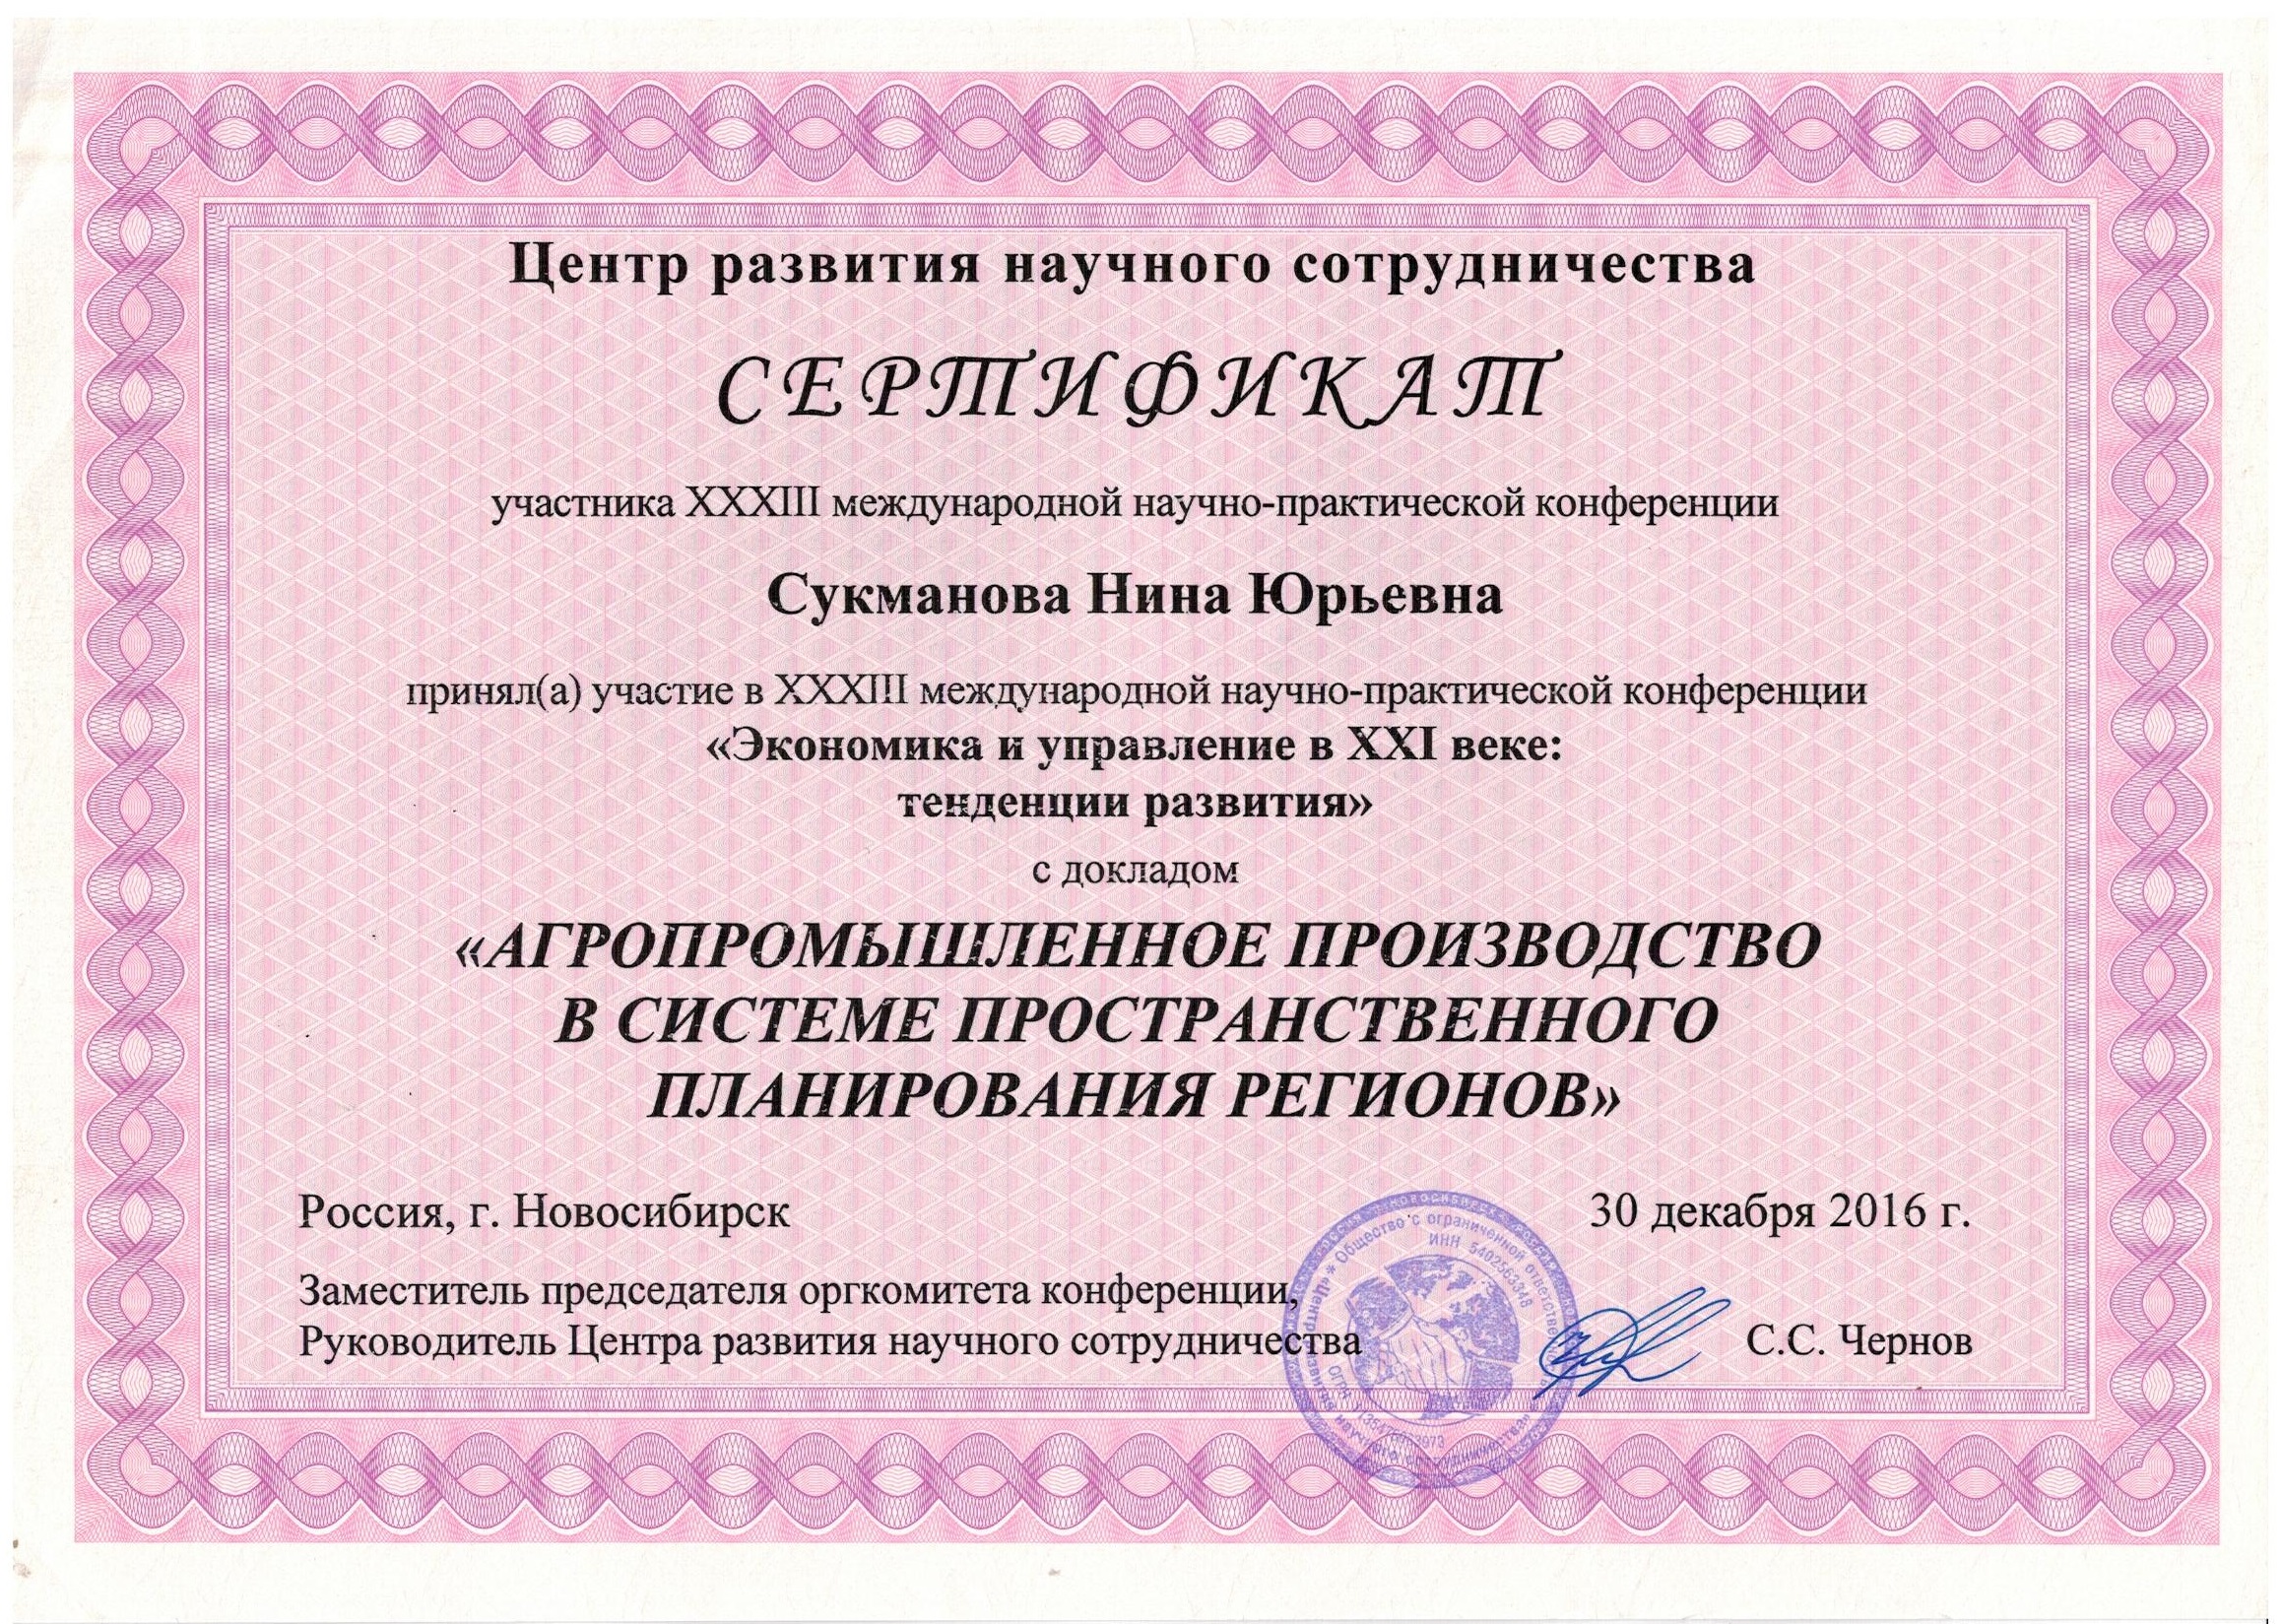 Сертификат НПК 2016 001.jpg